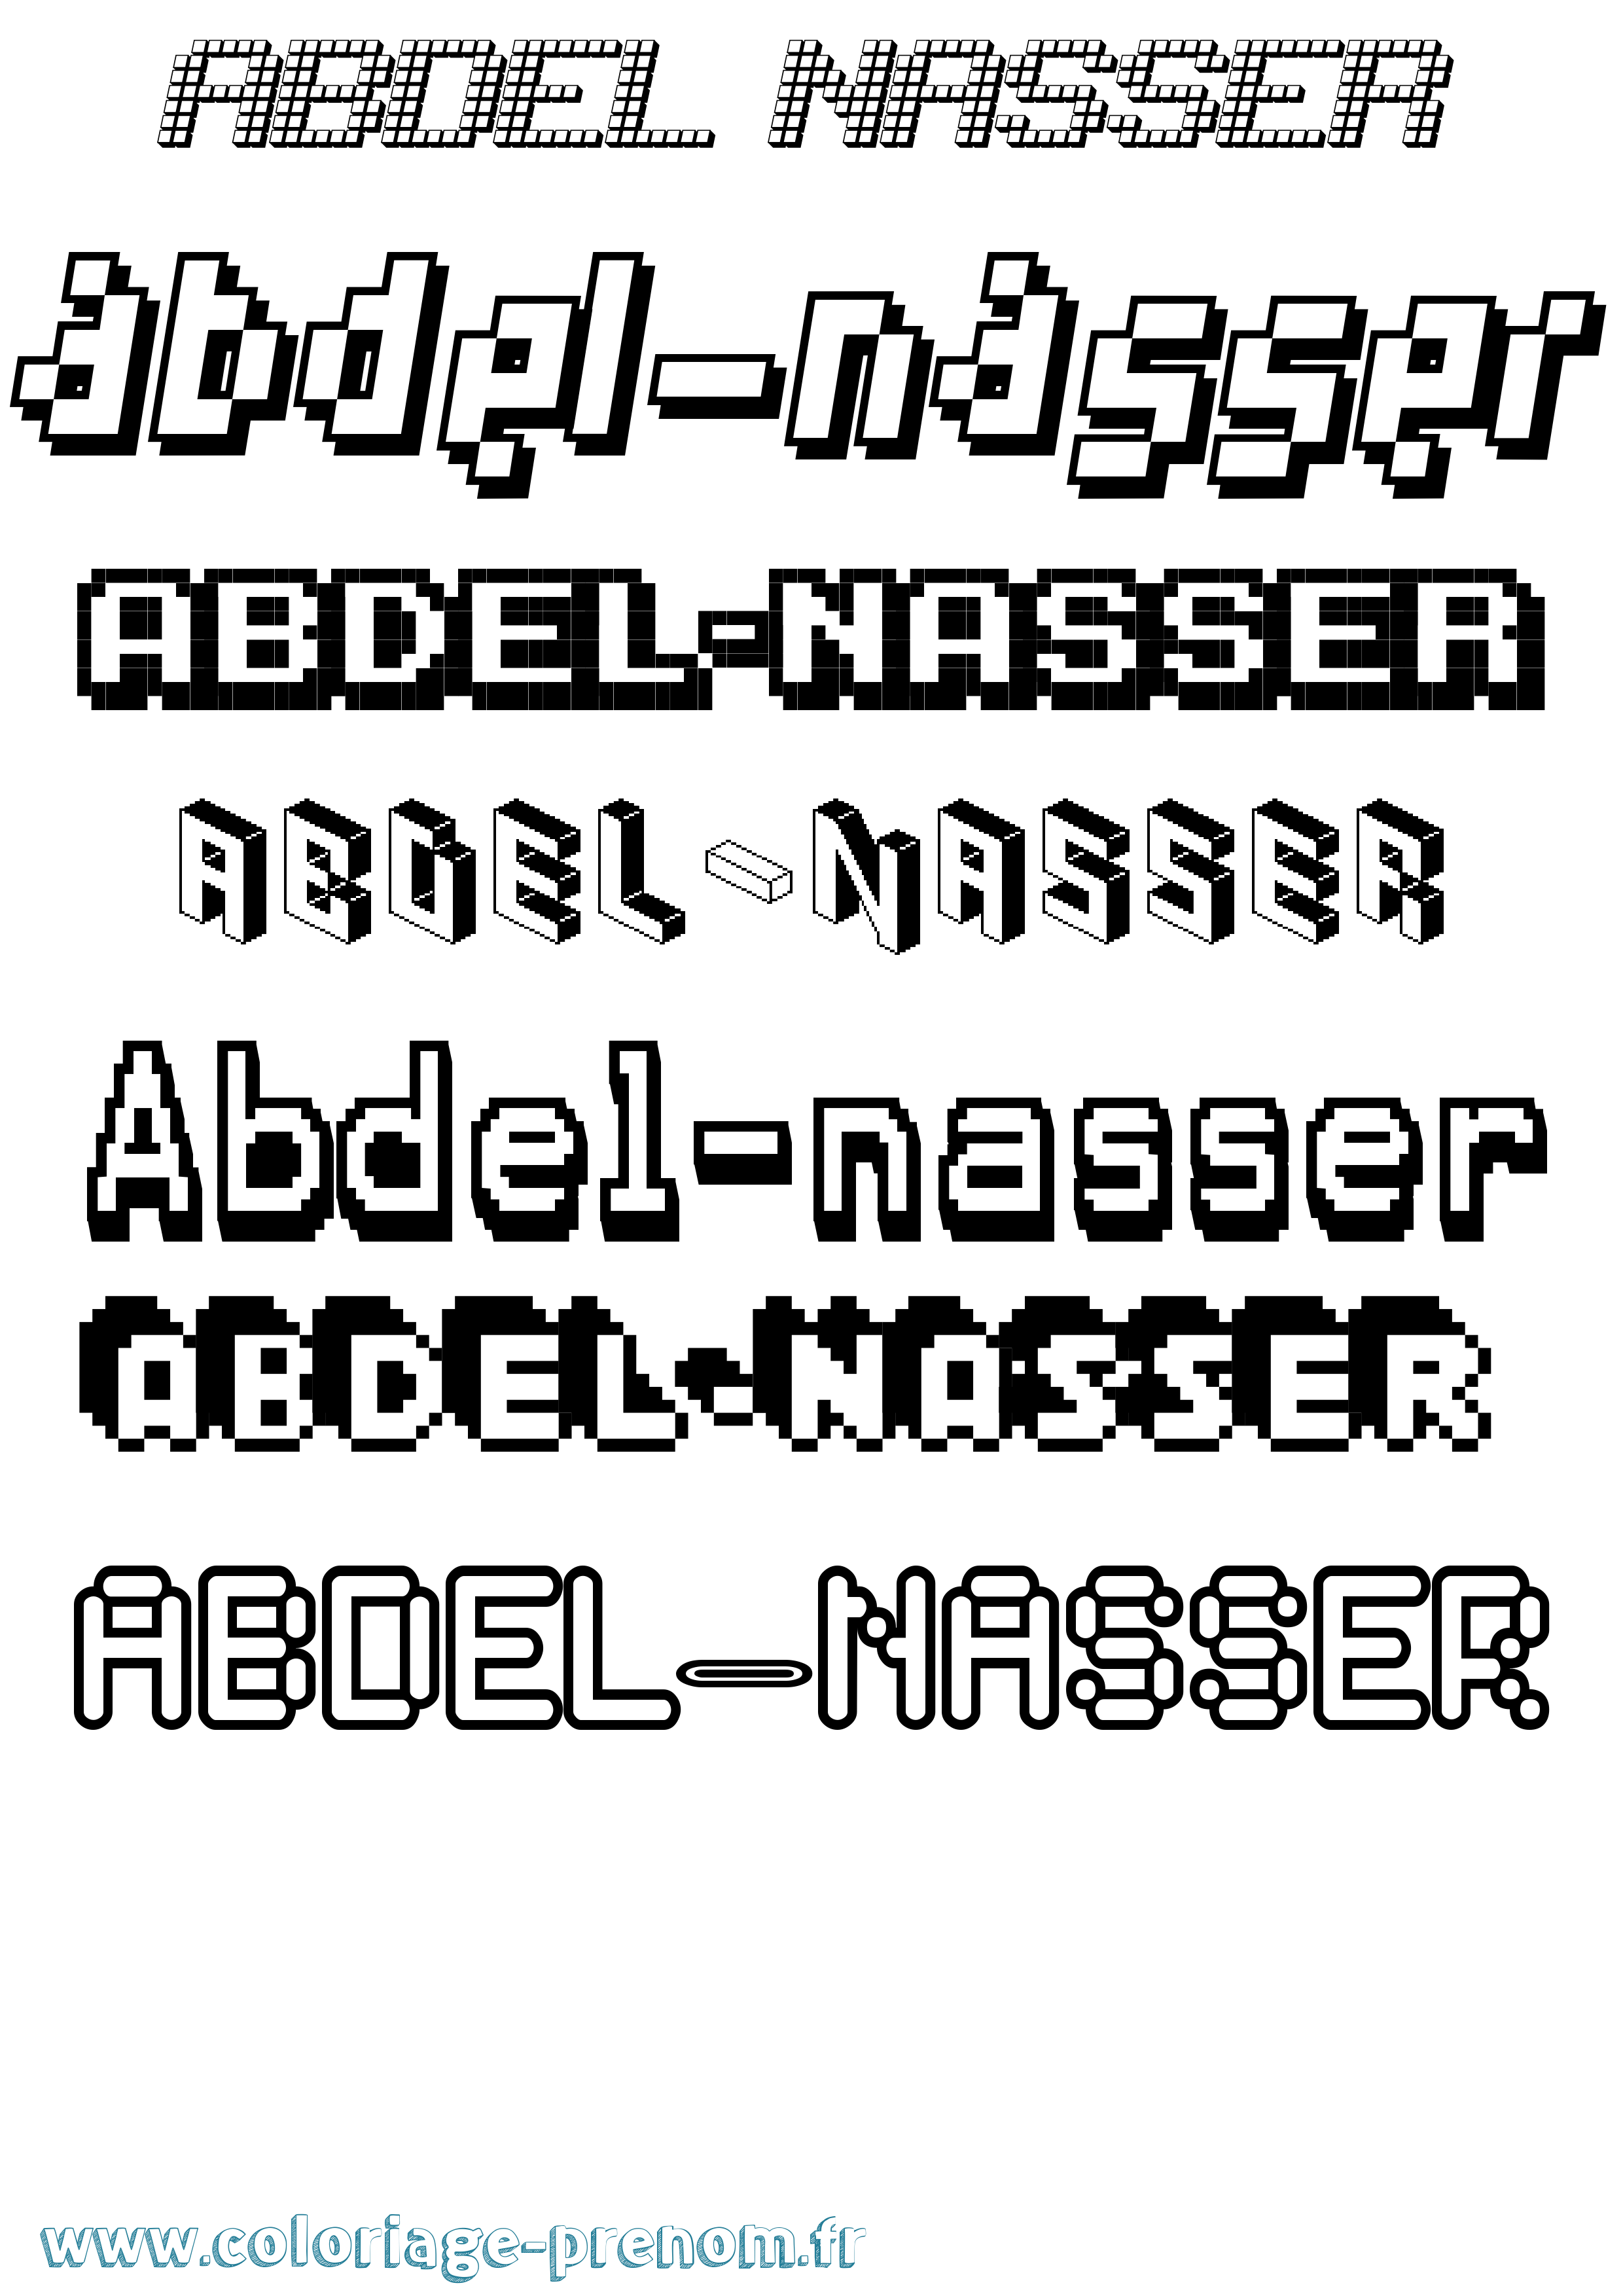 Coloriage prénom Abdel-Nasser Pixel